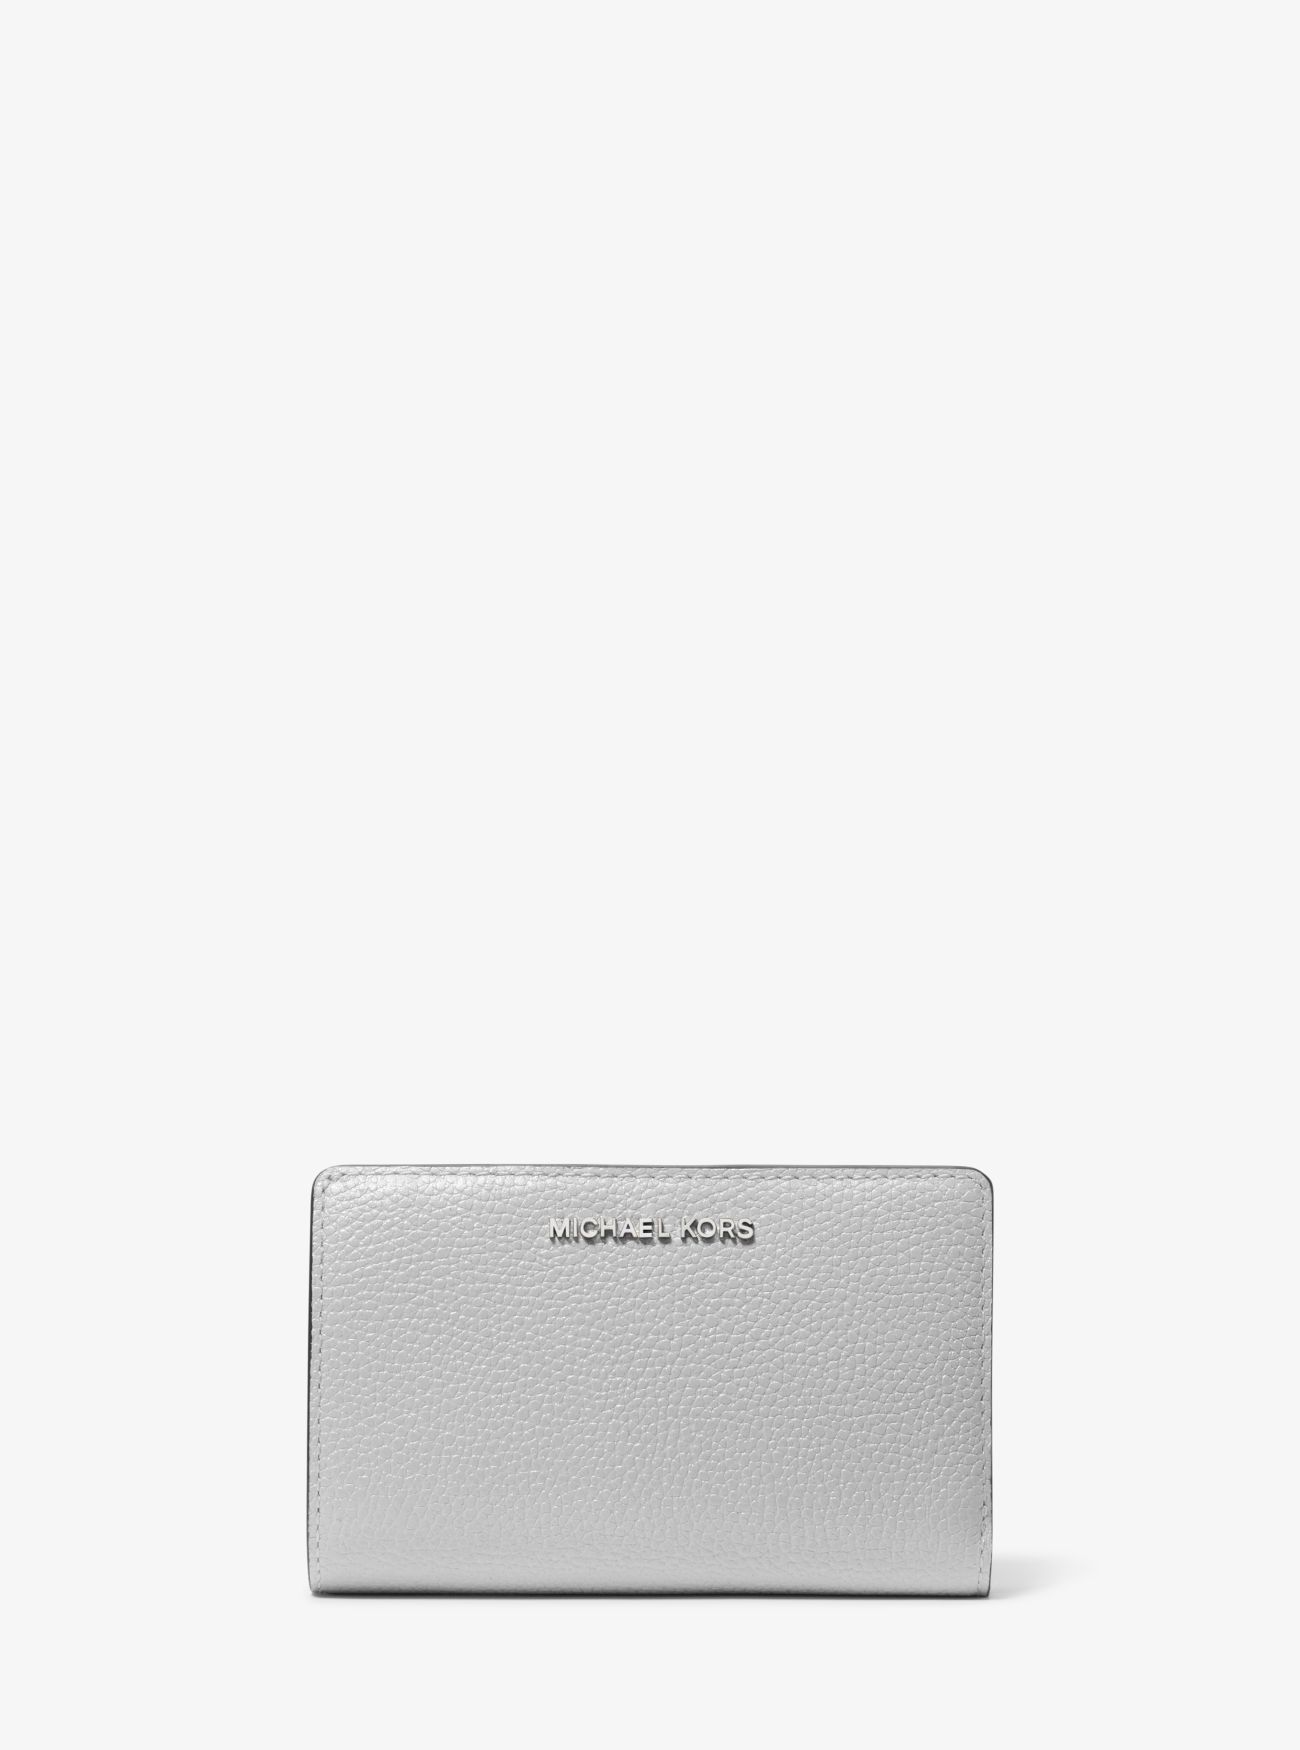 MK Empire Medium Pebbled Leather Wallet - Grey - Michael Kors